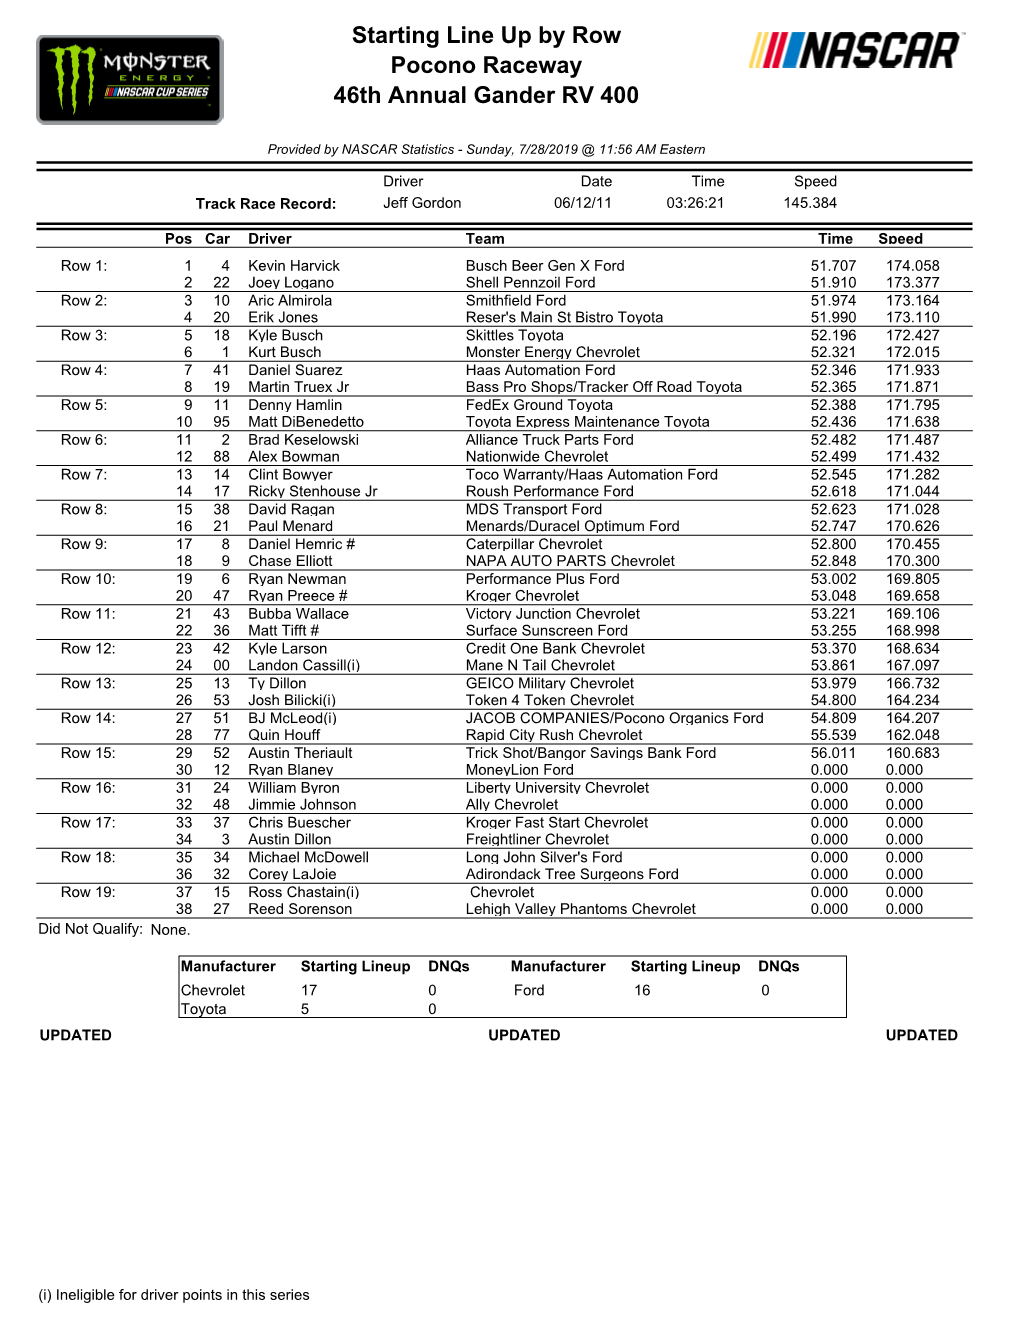 Starting Line up by Row Pocono Raceway 46Th Annual Gander RV 400